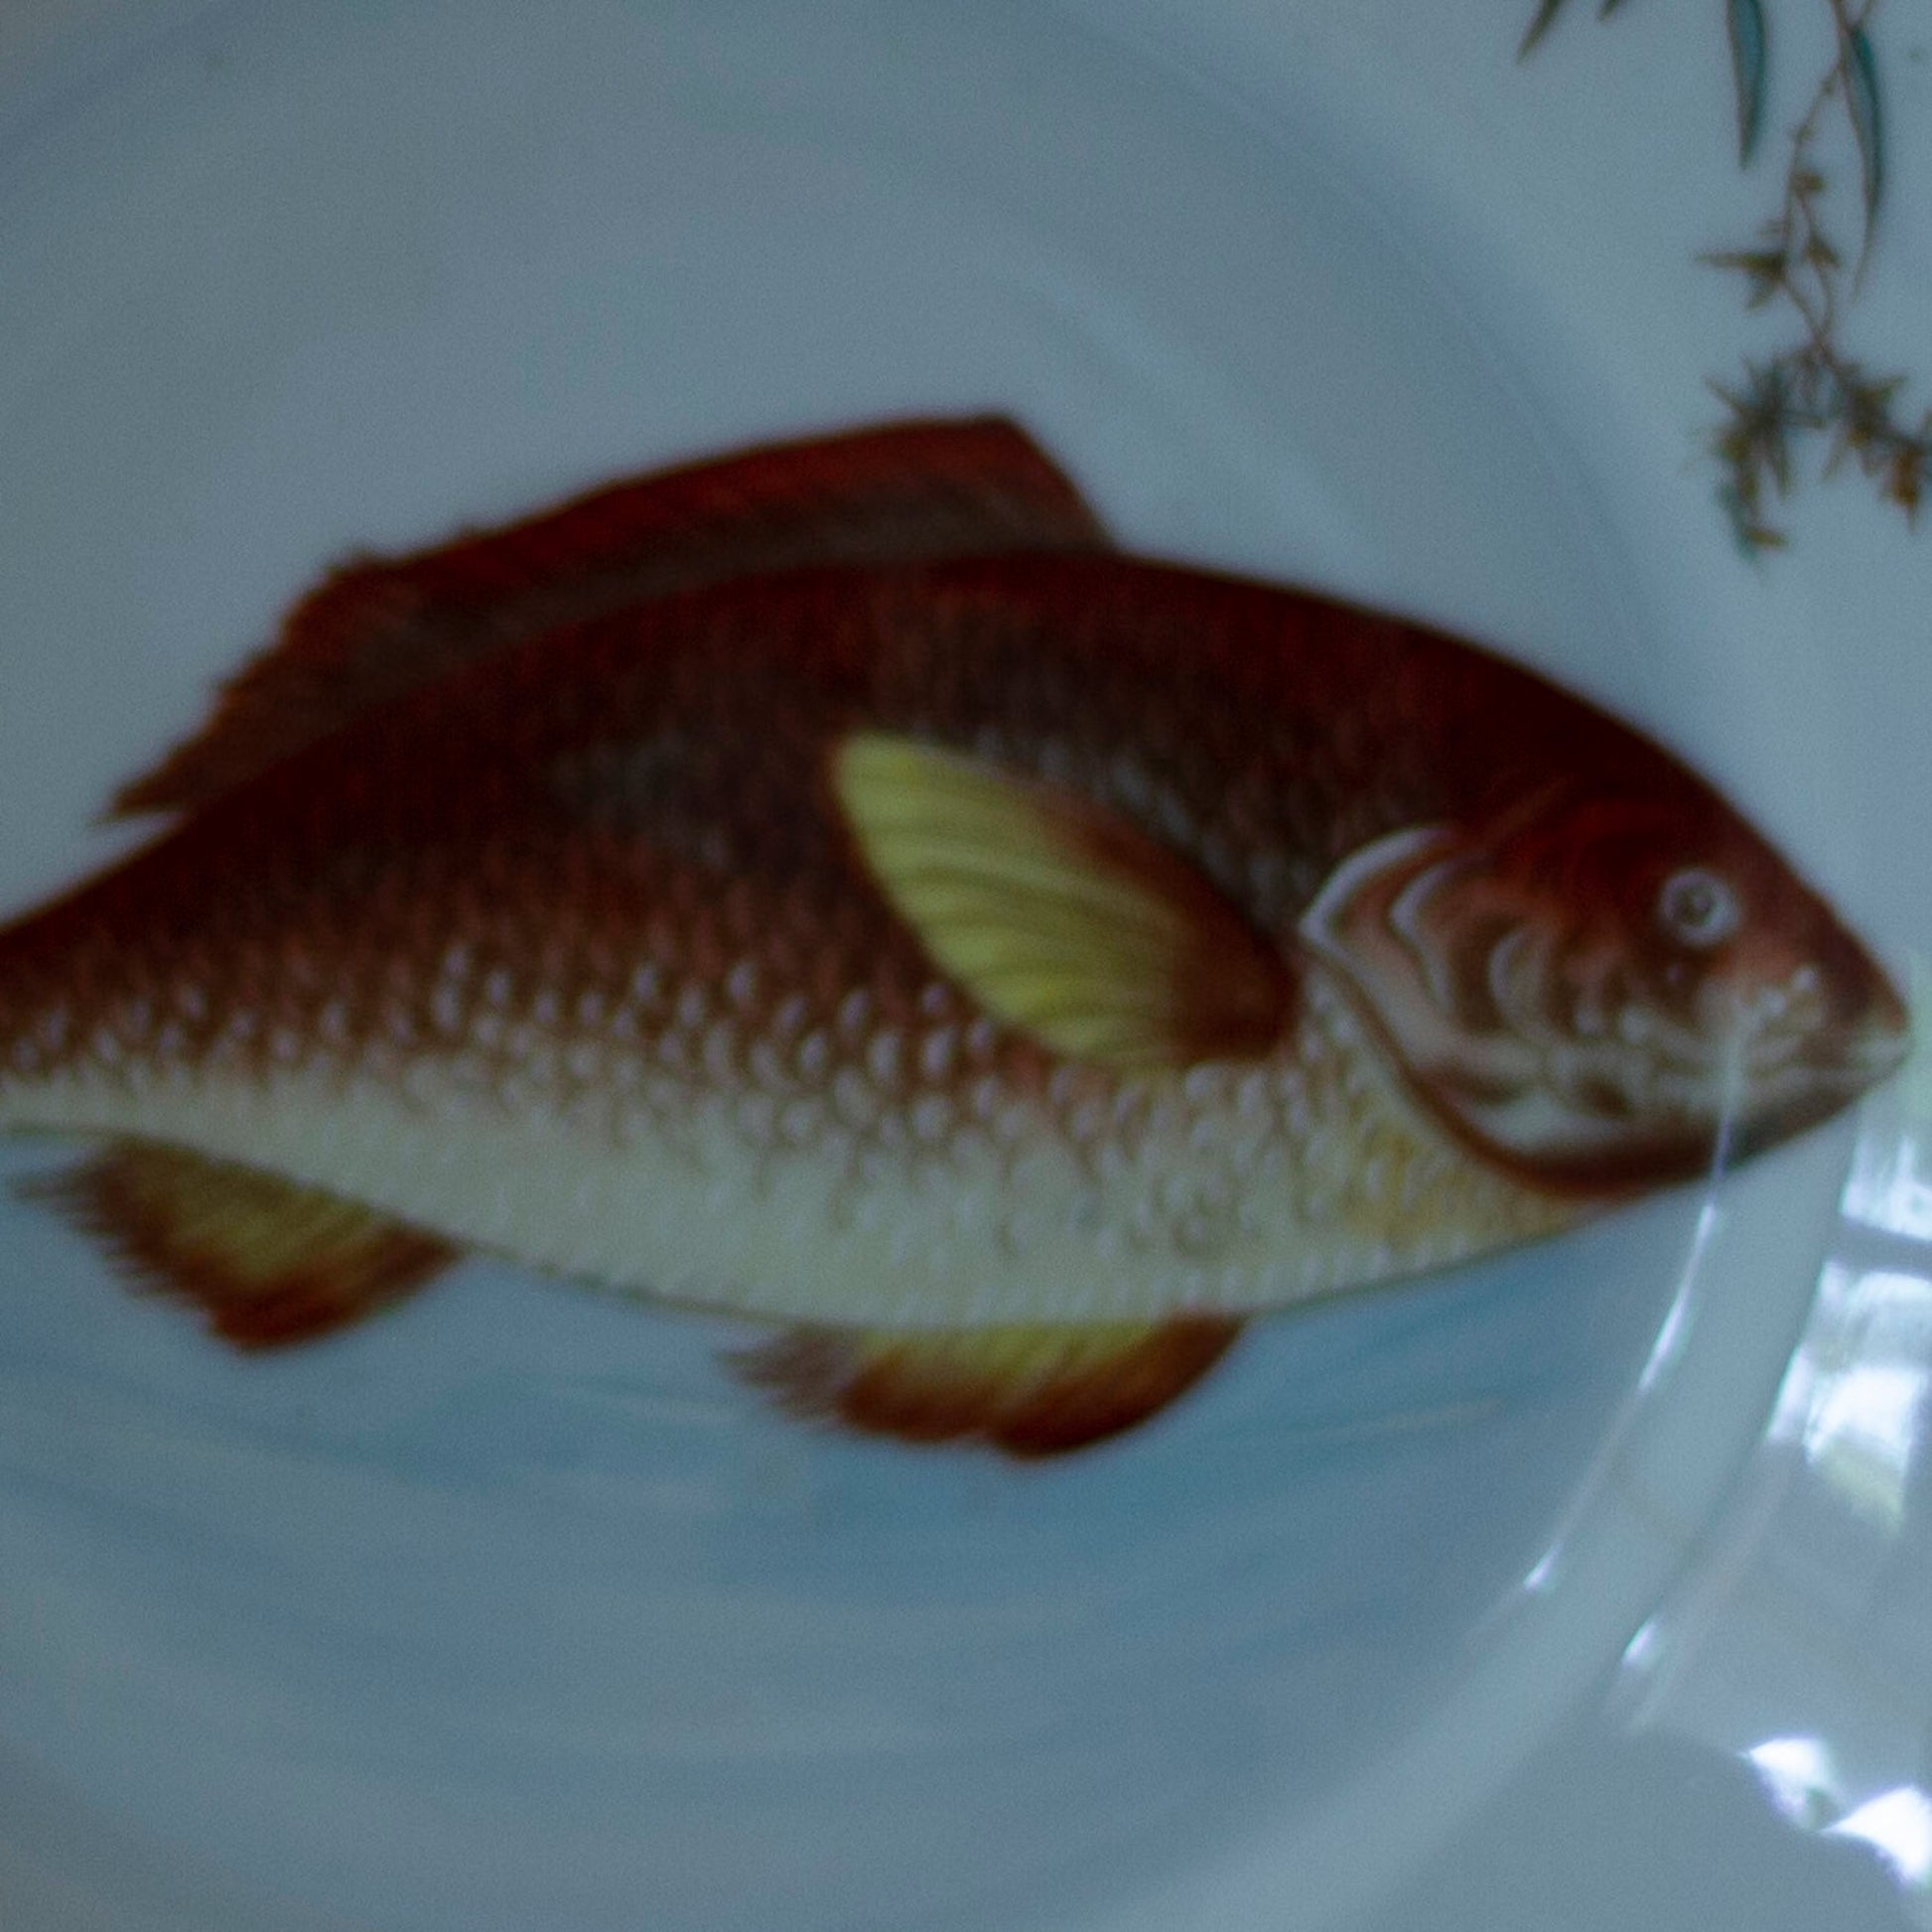 Hinrichs & Company Transferware & Hand Painted Fish Plate